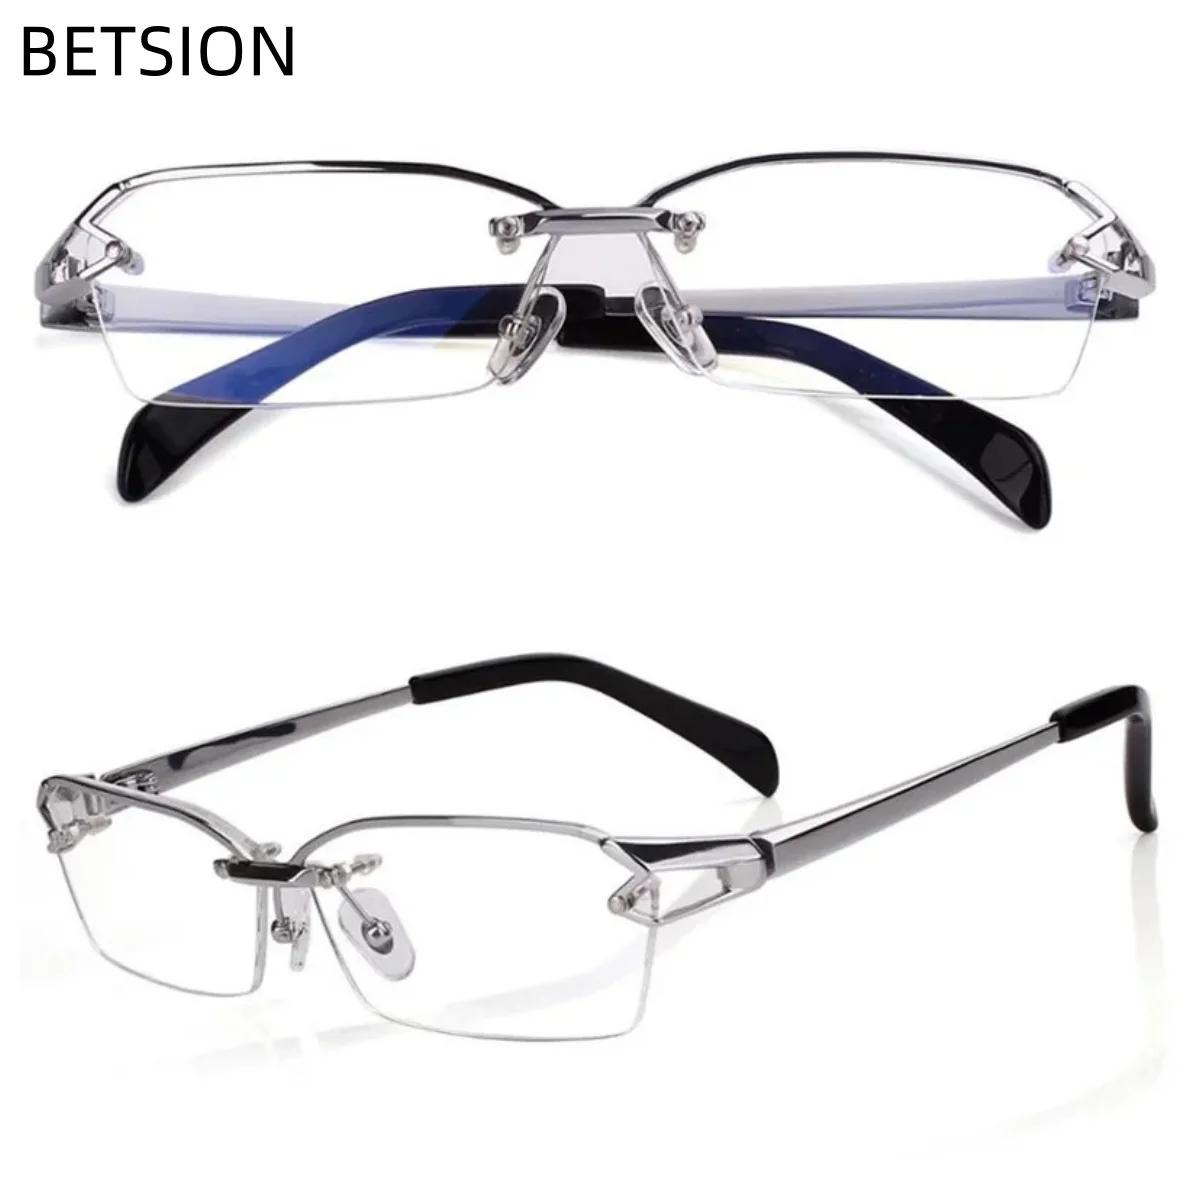 

BETSION High-quality Titanium Glasses Frame Men Semi Rim Square Business Optical Eyeglass Frames Prescription Eyeglasss For Men